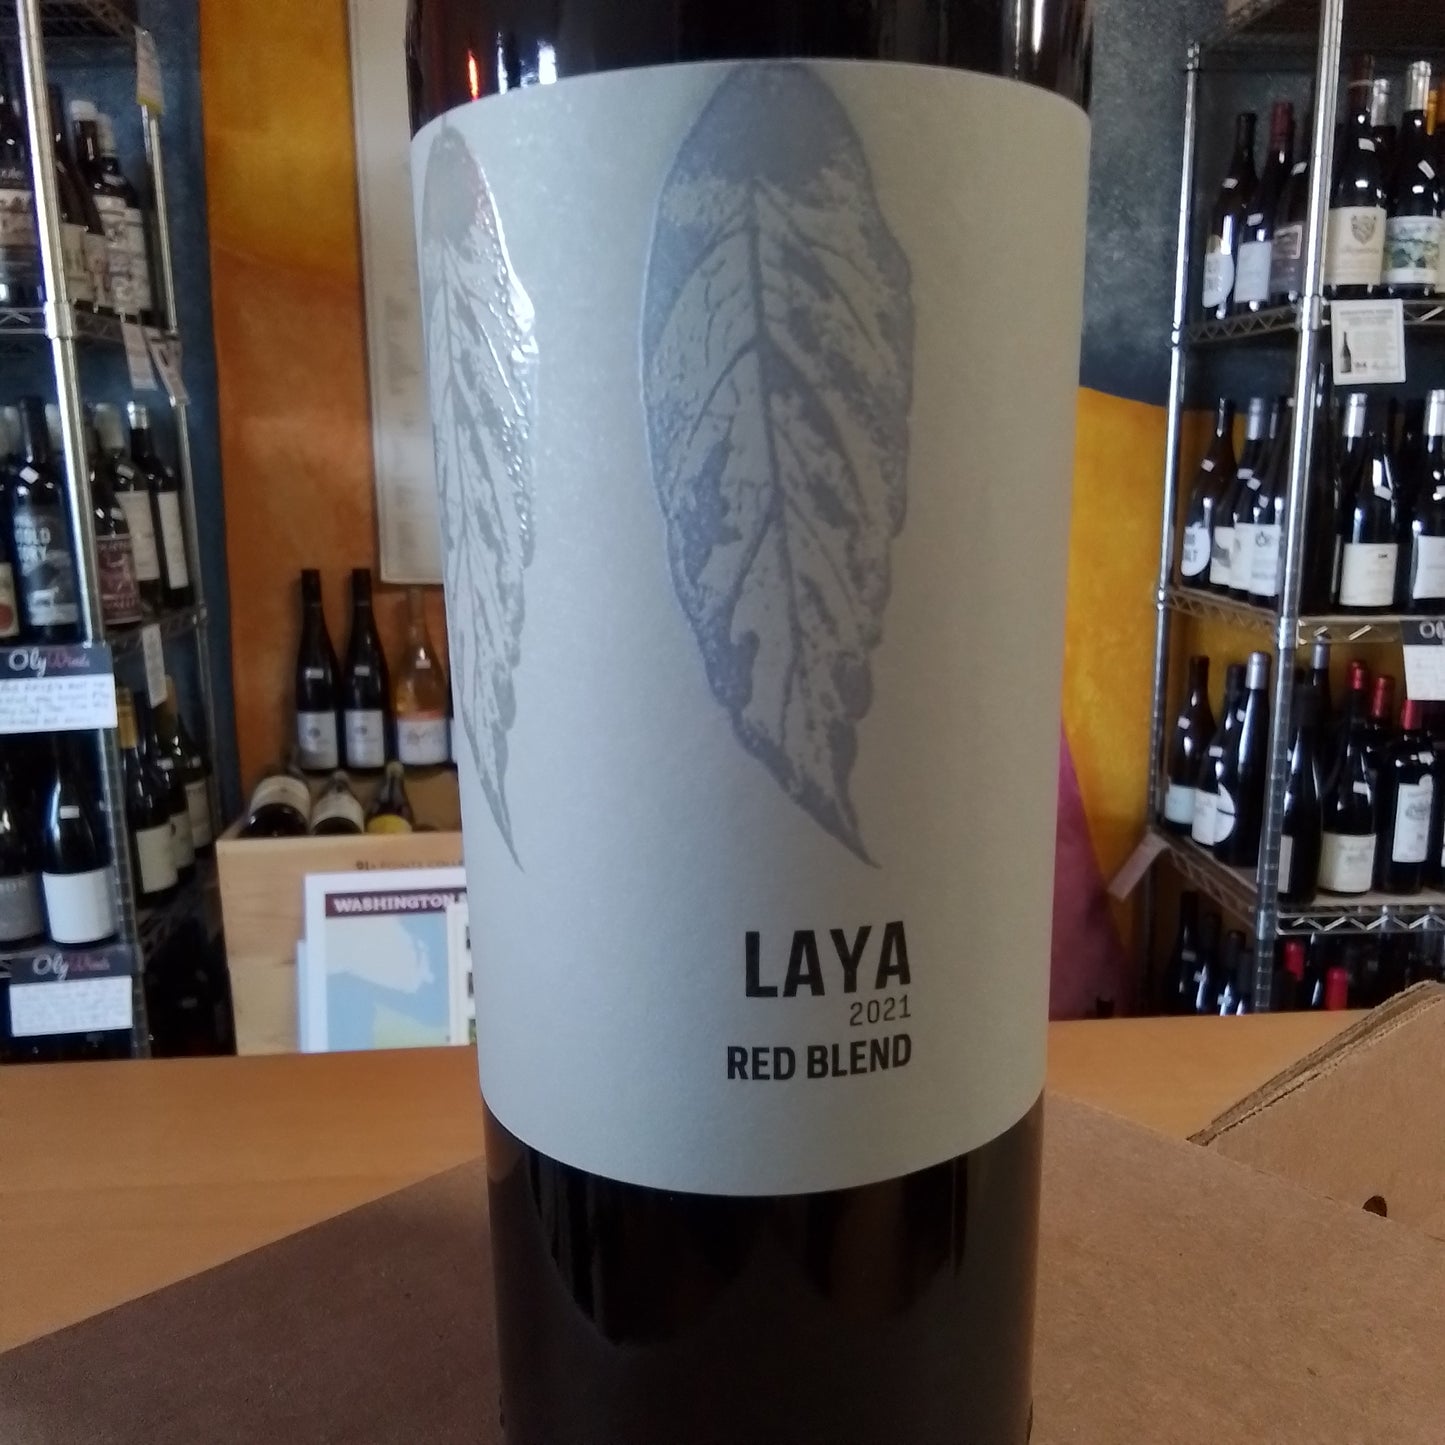 ATALAYA 2021 Red Blend 'Laya' (Spain)